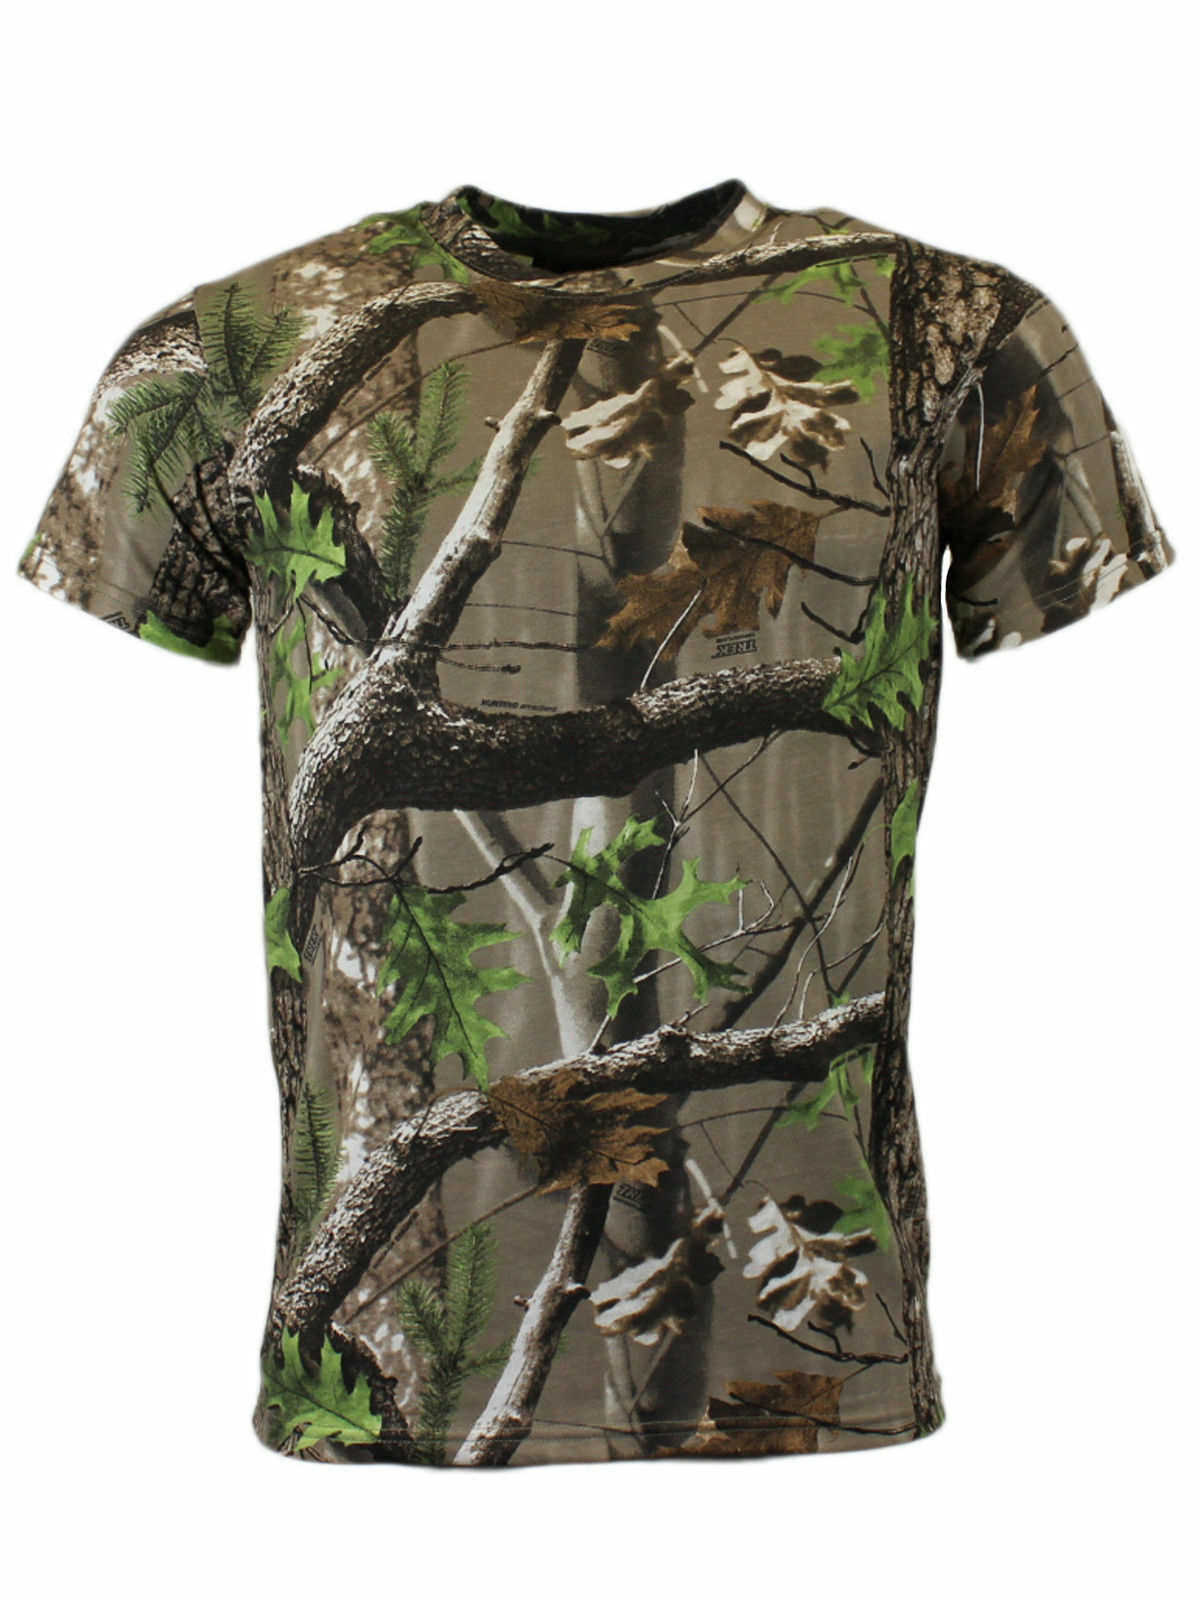 Game Trek Camouflage T Shirt | Hunting Fishing Camo Top